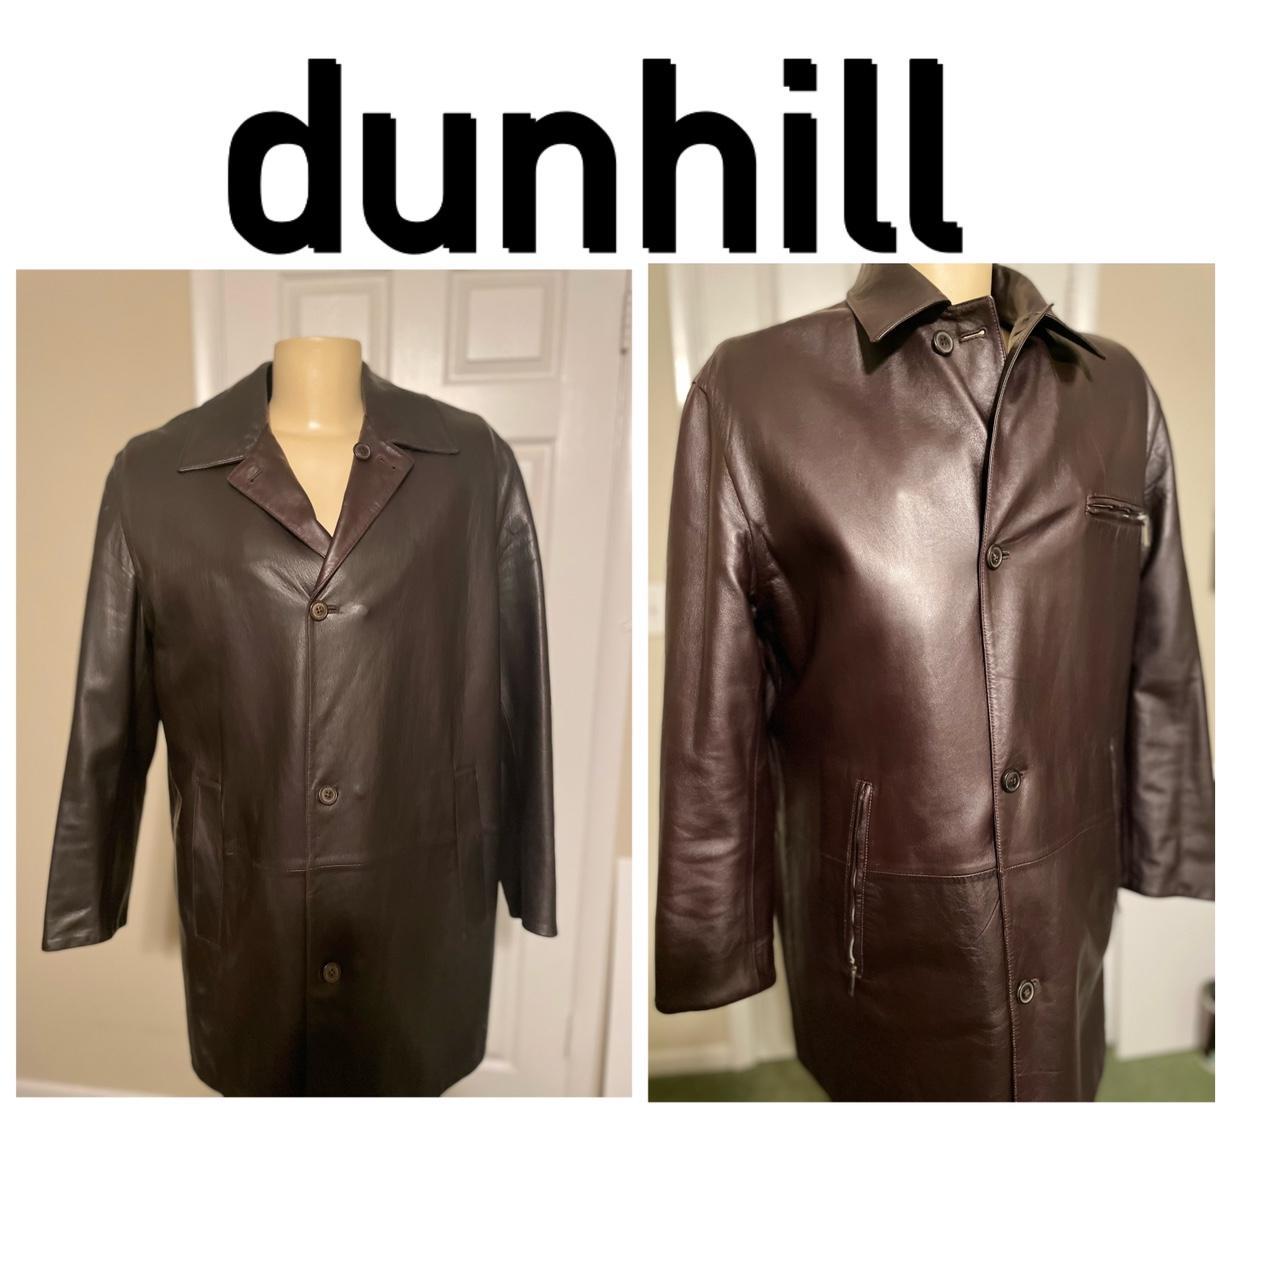 Dunhill Men's Jacket